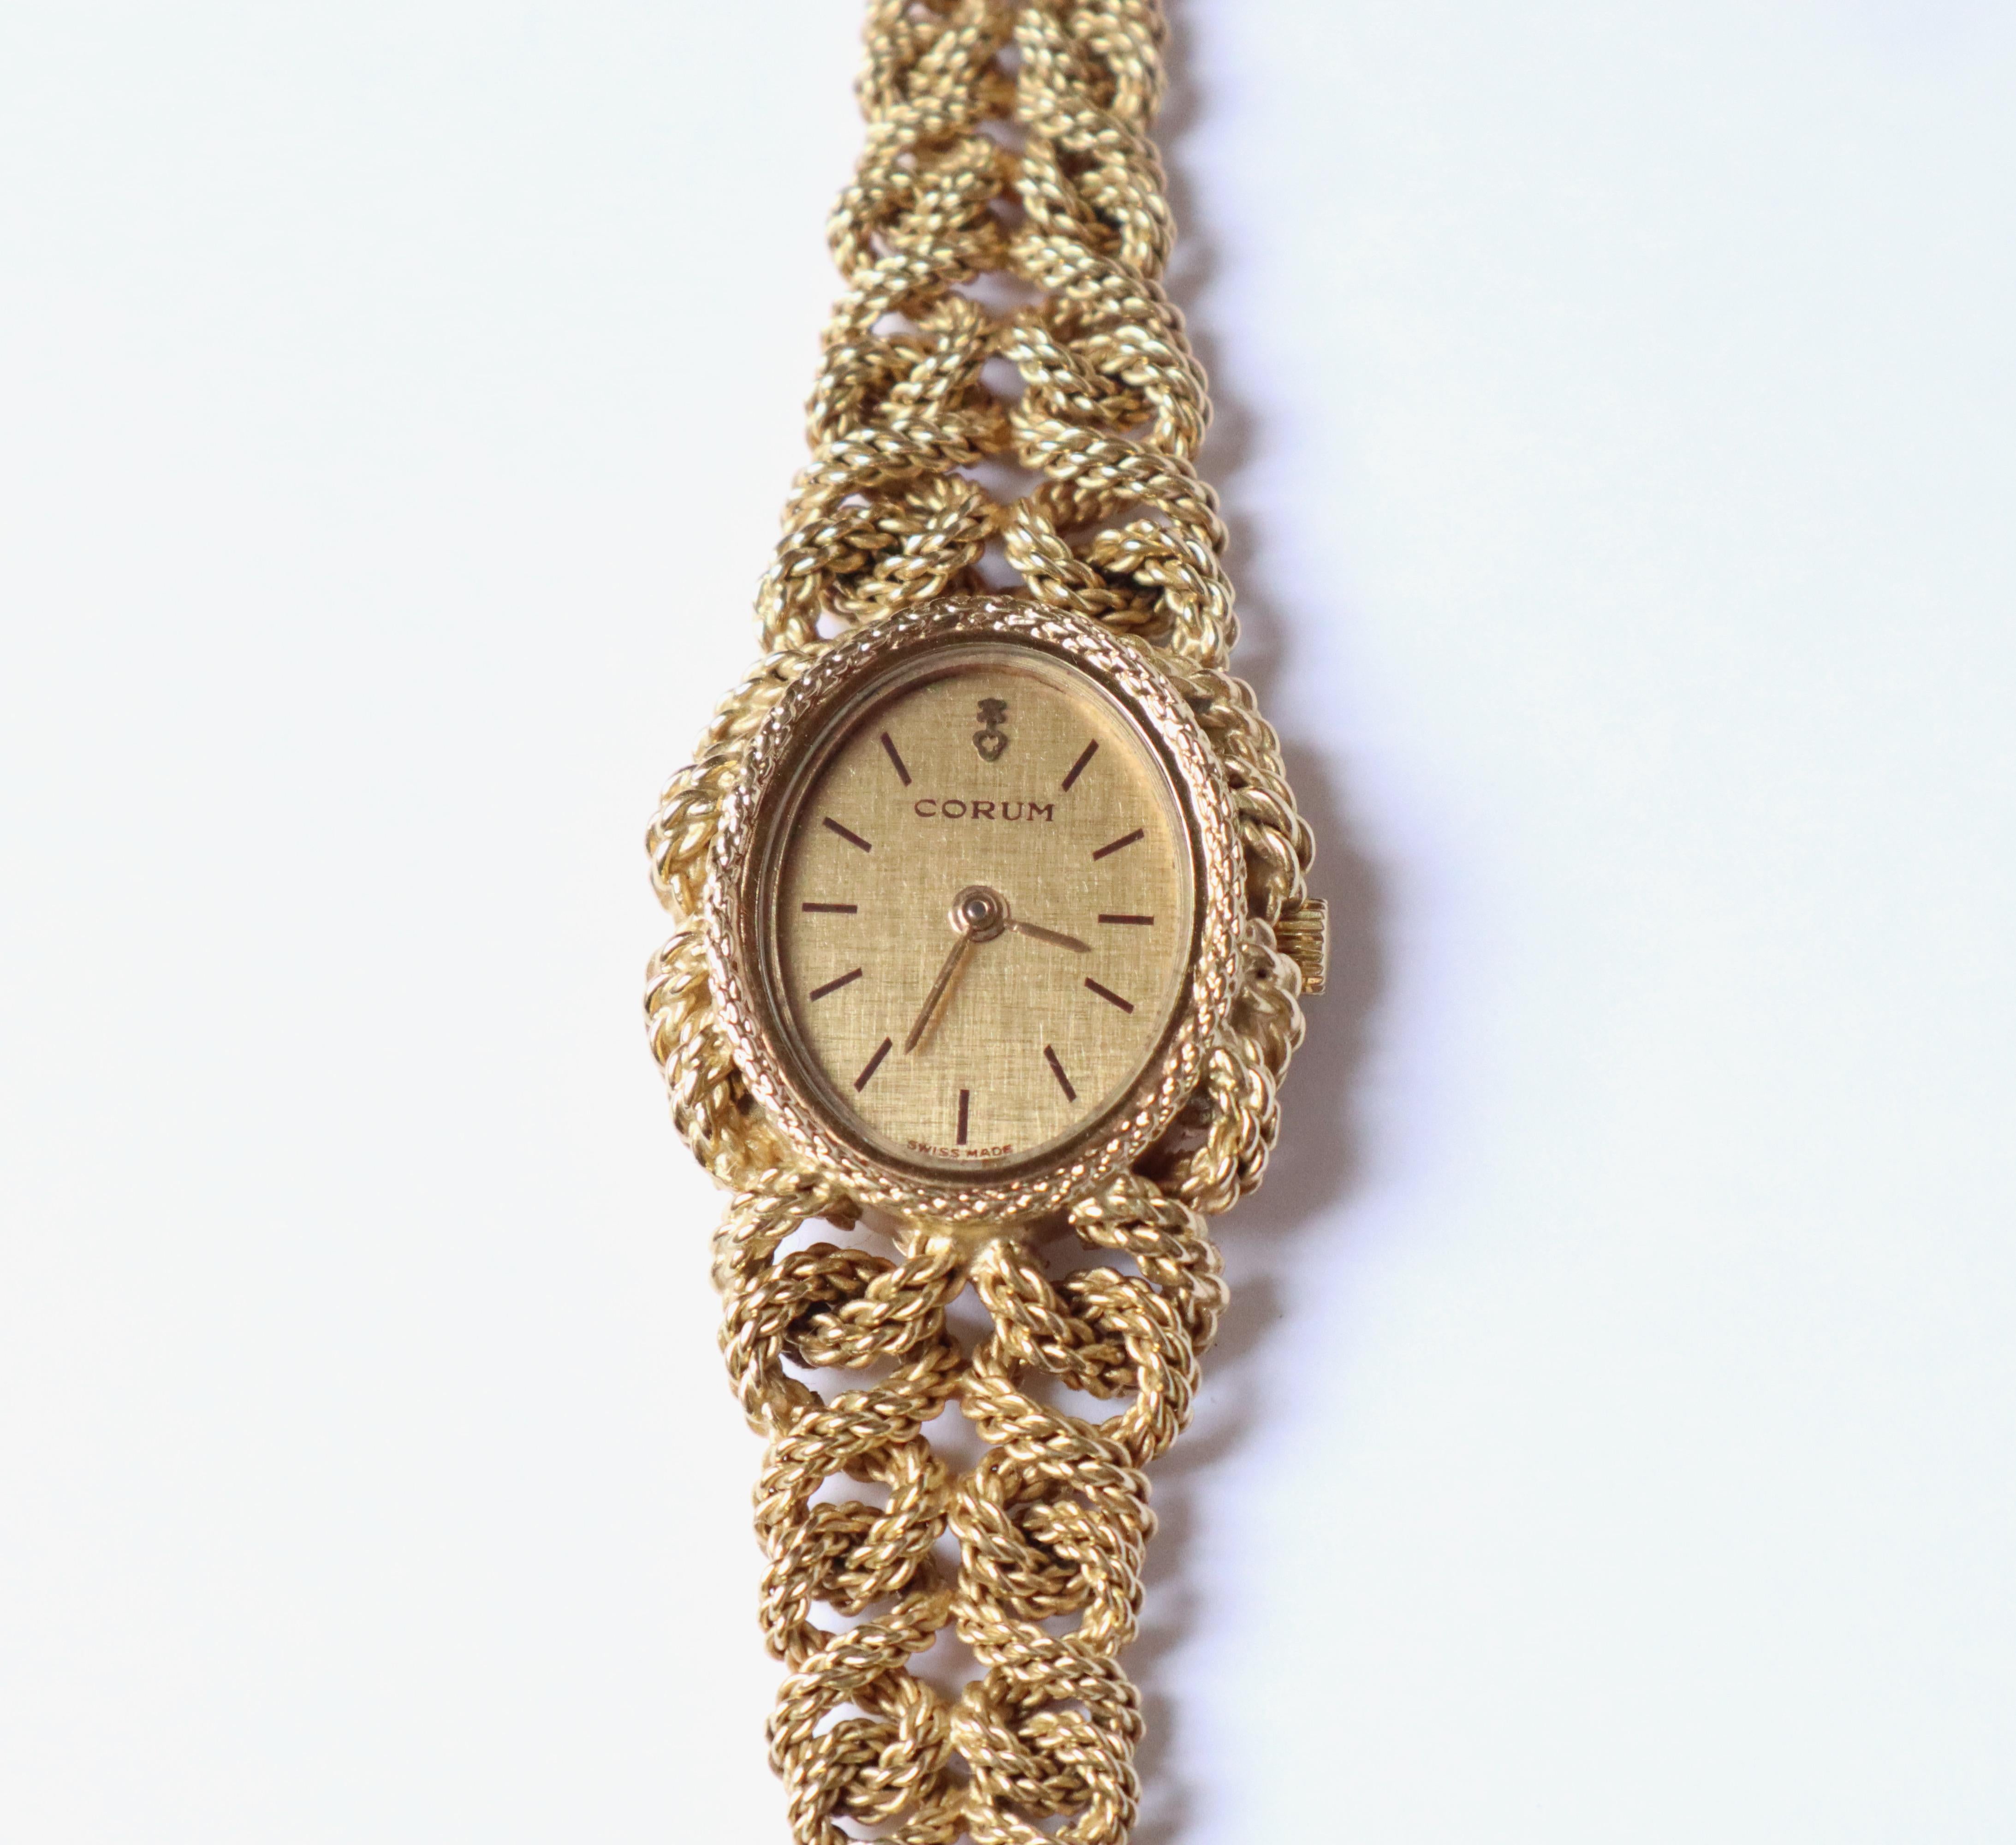 vintage oval watch